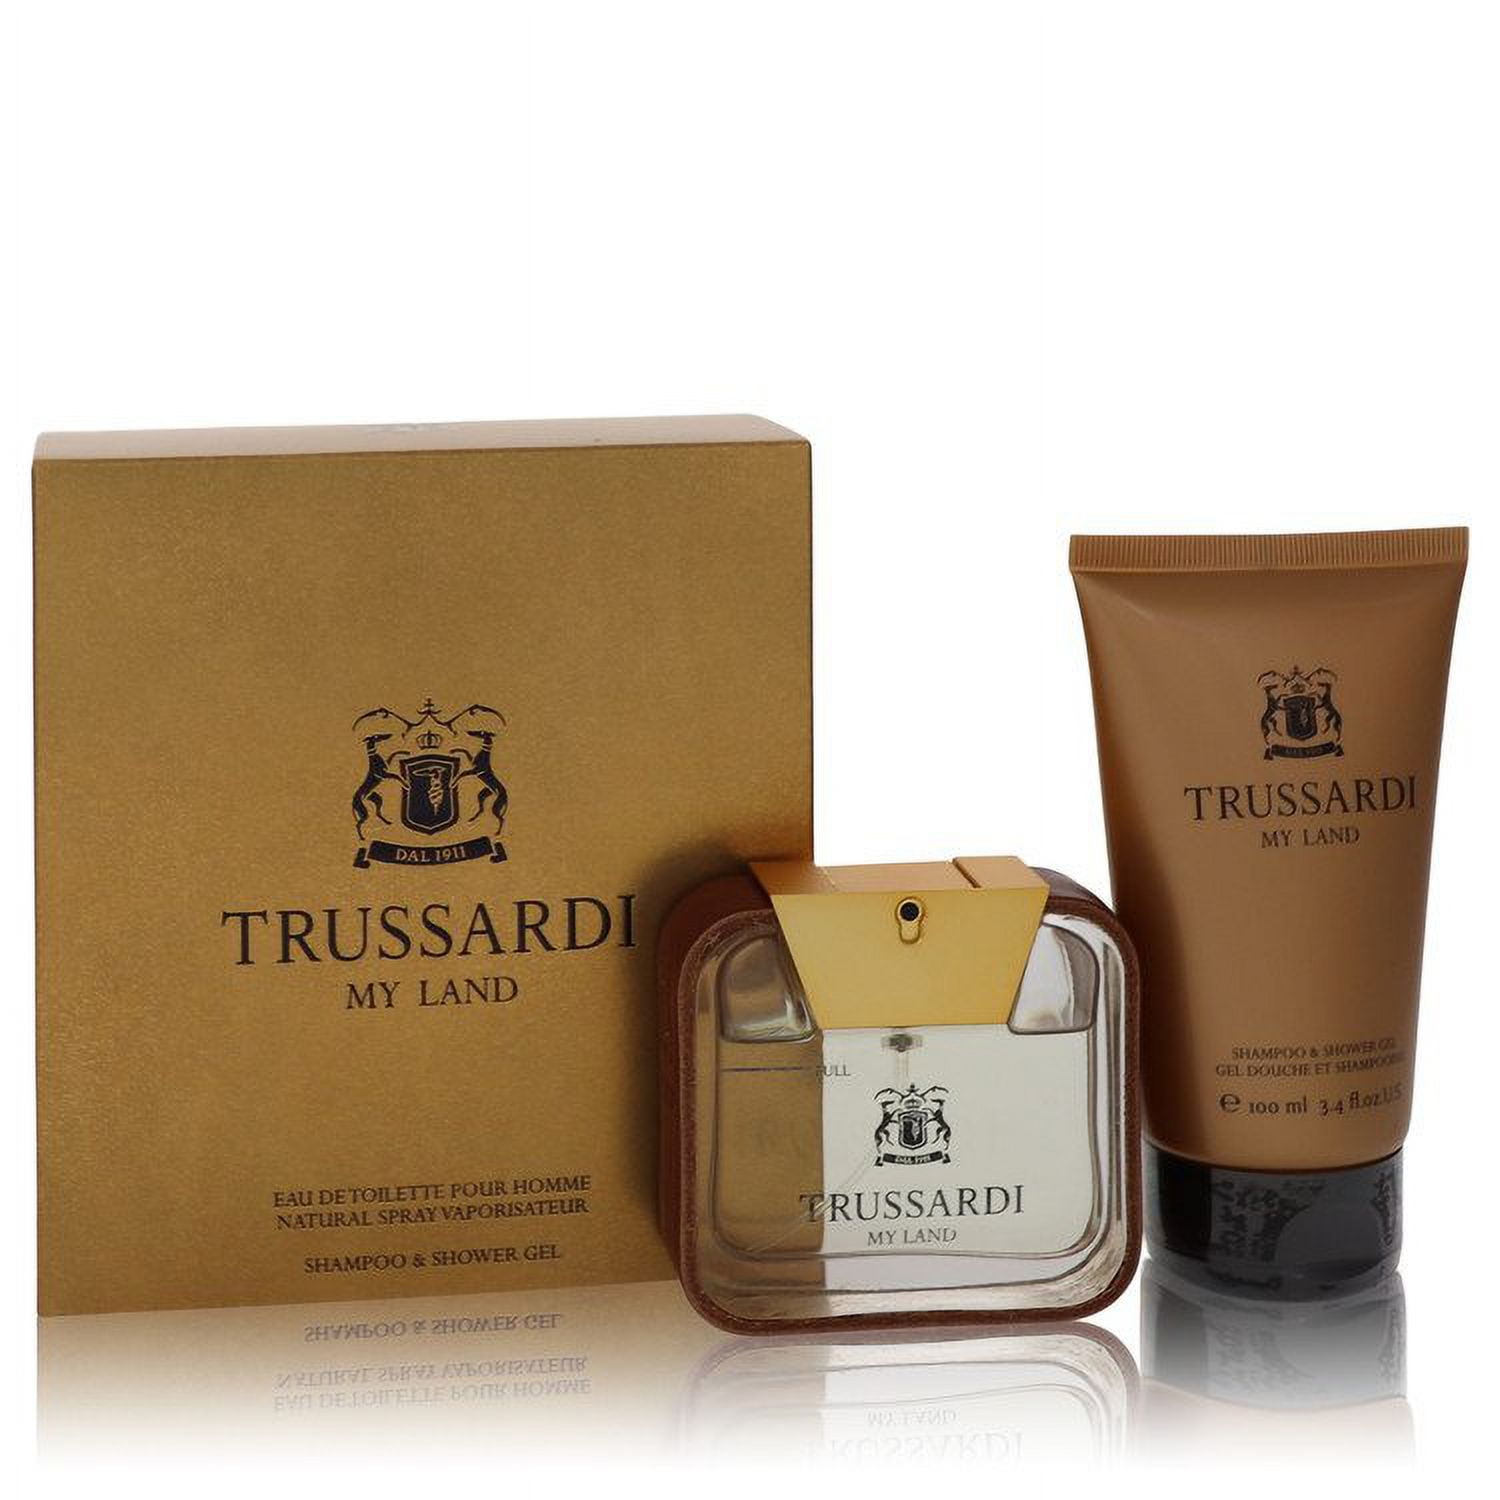 Trussardi My Land by De Gift Eau 1.7 Shampoo oz + -- Set Gel & 3.4 oz Shower Trussardi Toilette